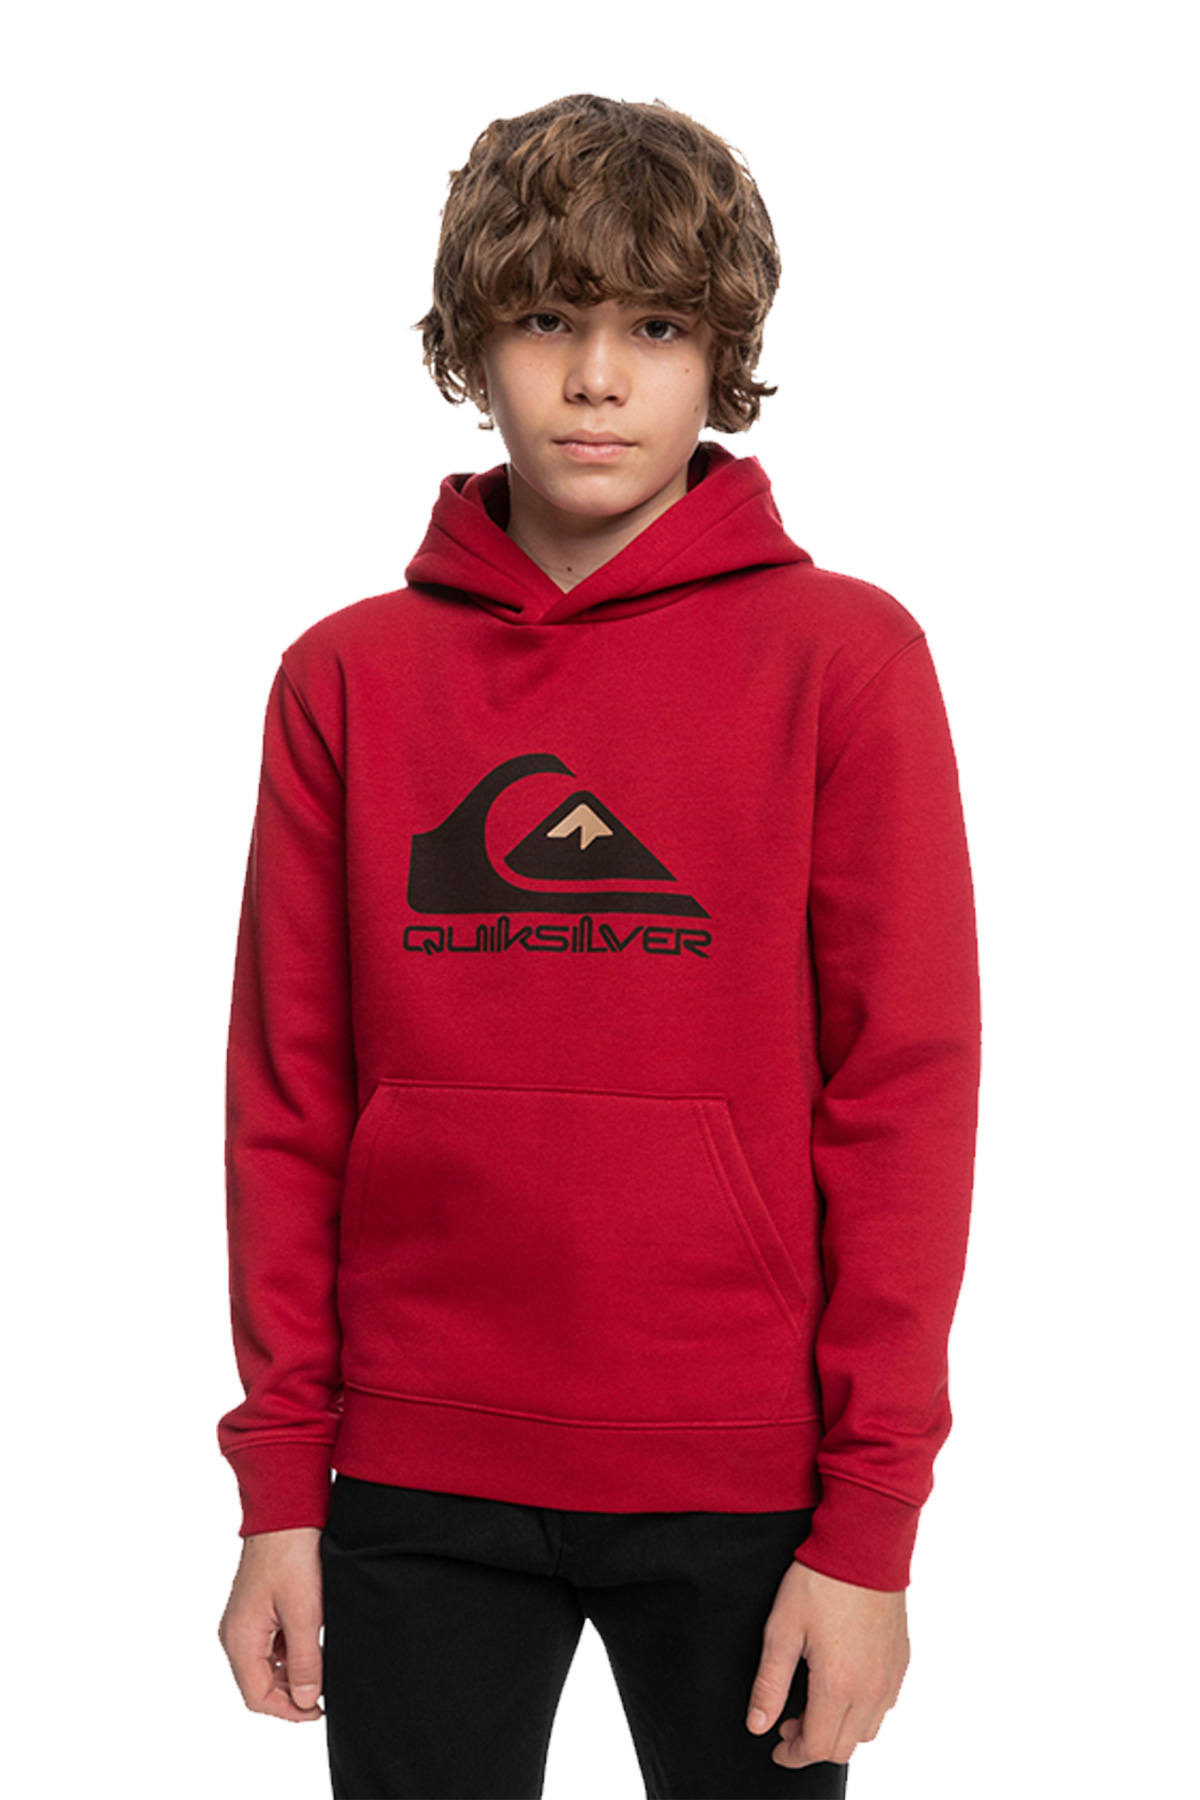 Quiksilver Big Logo Hoodie Kırmızı Çocuk Sweatshirt